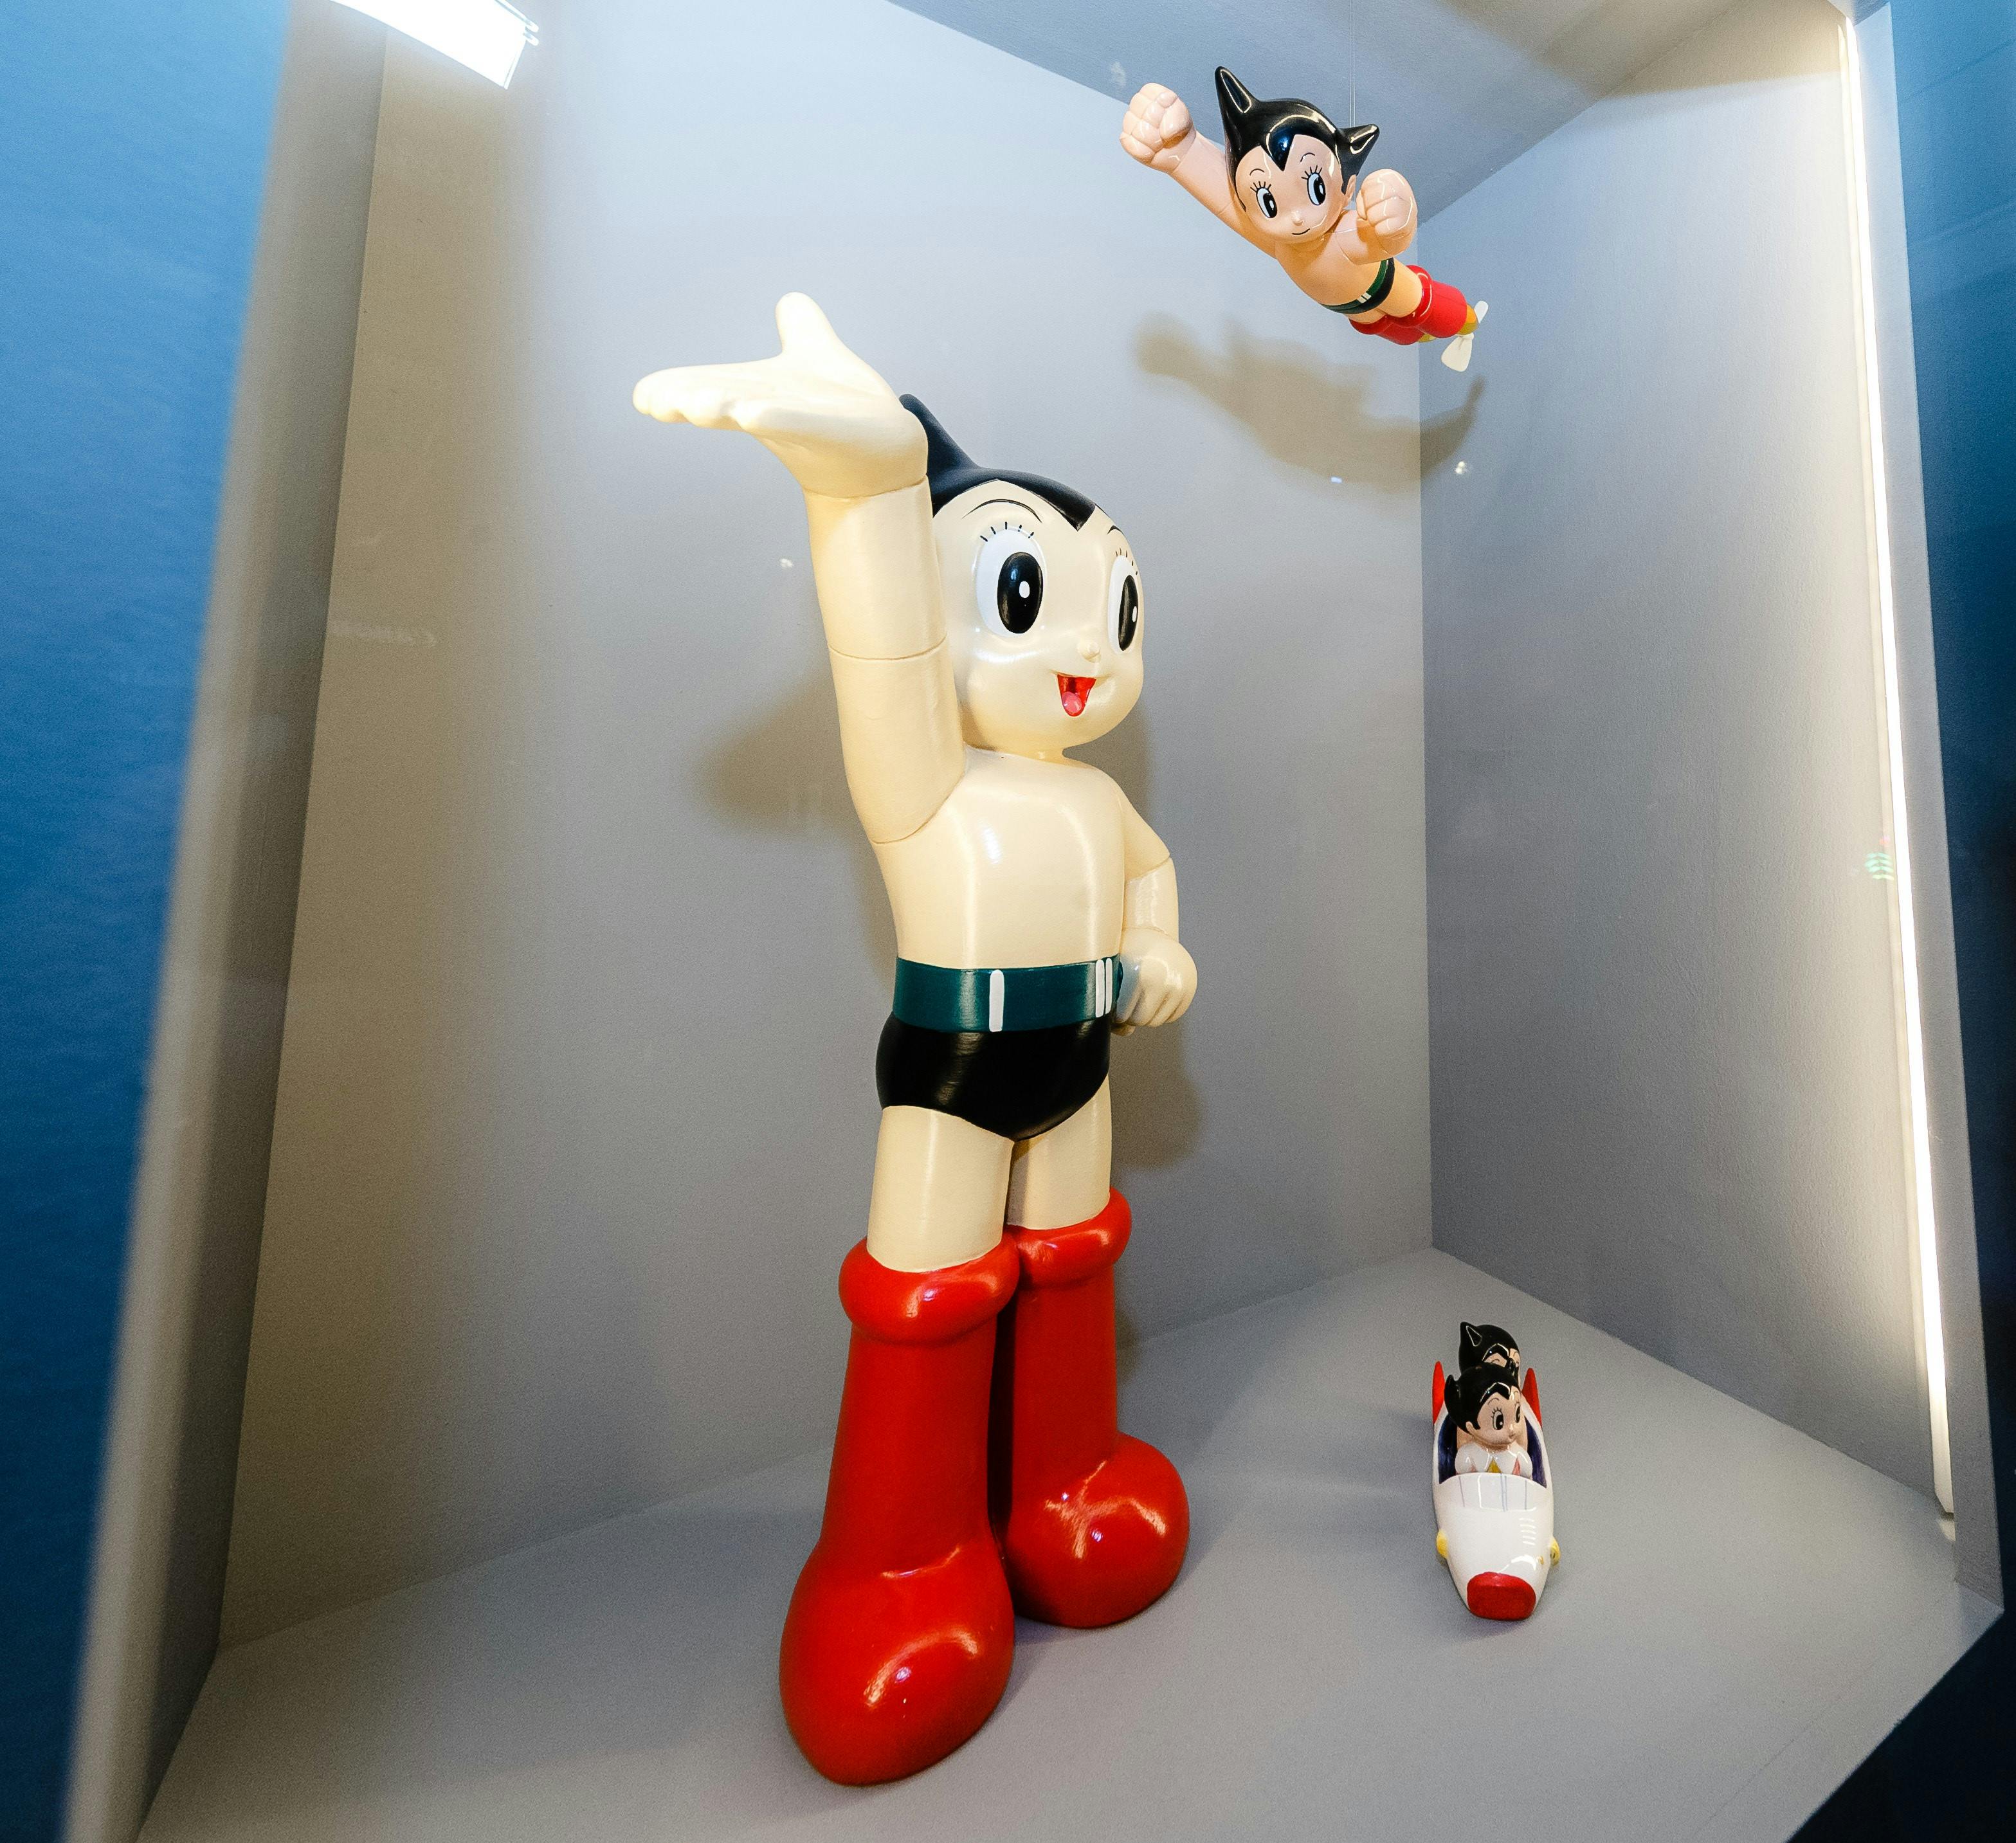 Astro boy figur til en Japansk kunstudstilling i Hamborg, 2016
